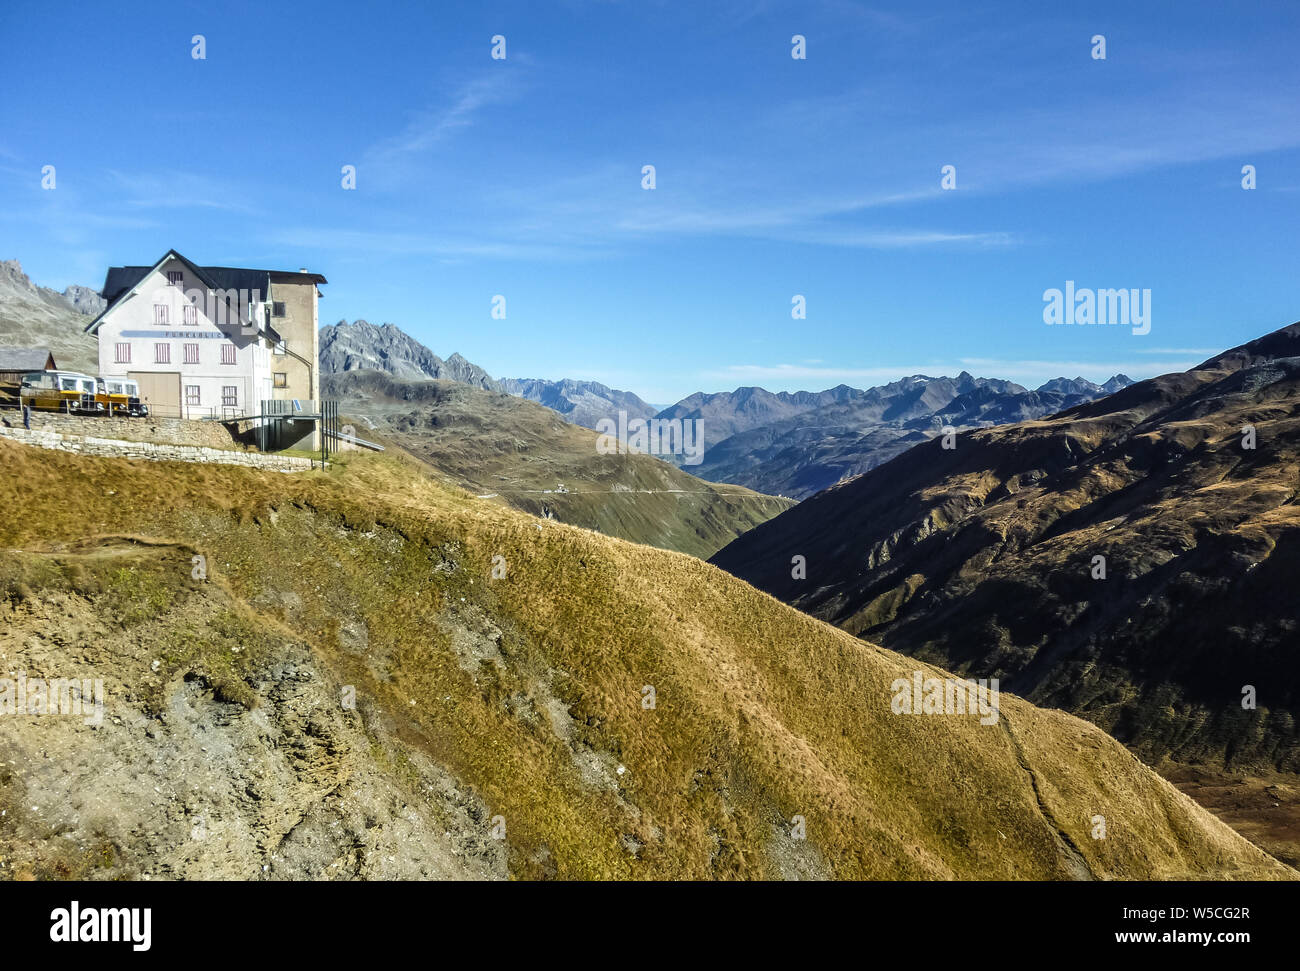 Hotel Furkablick in the mountains, Furkastrasse, Realp, Swiss Alps, Switzerland, Europe Stock Photo